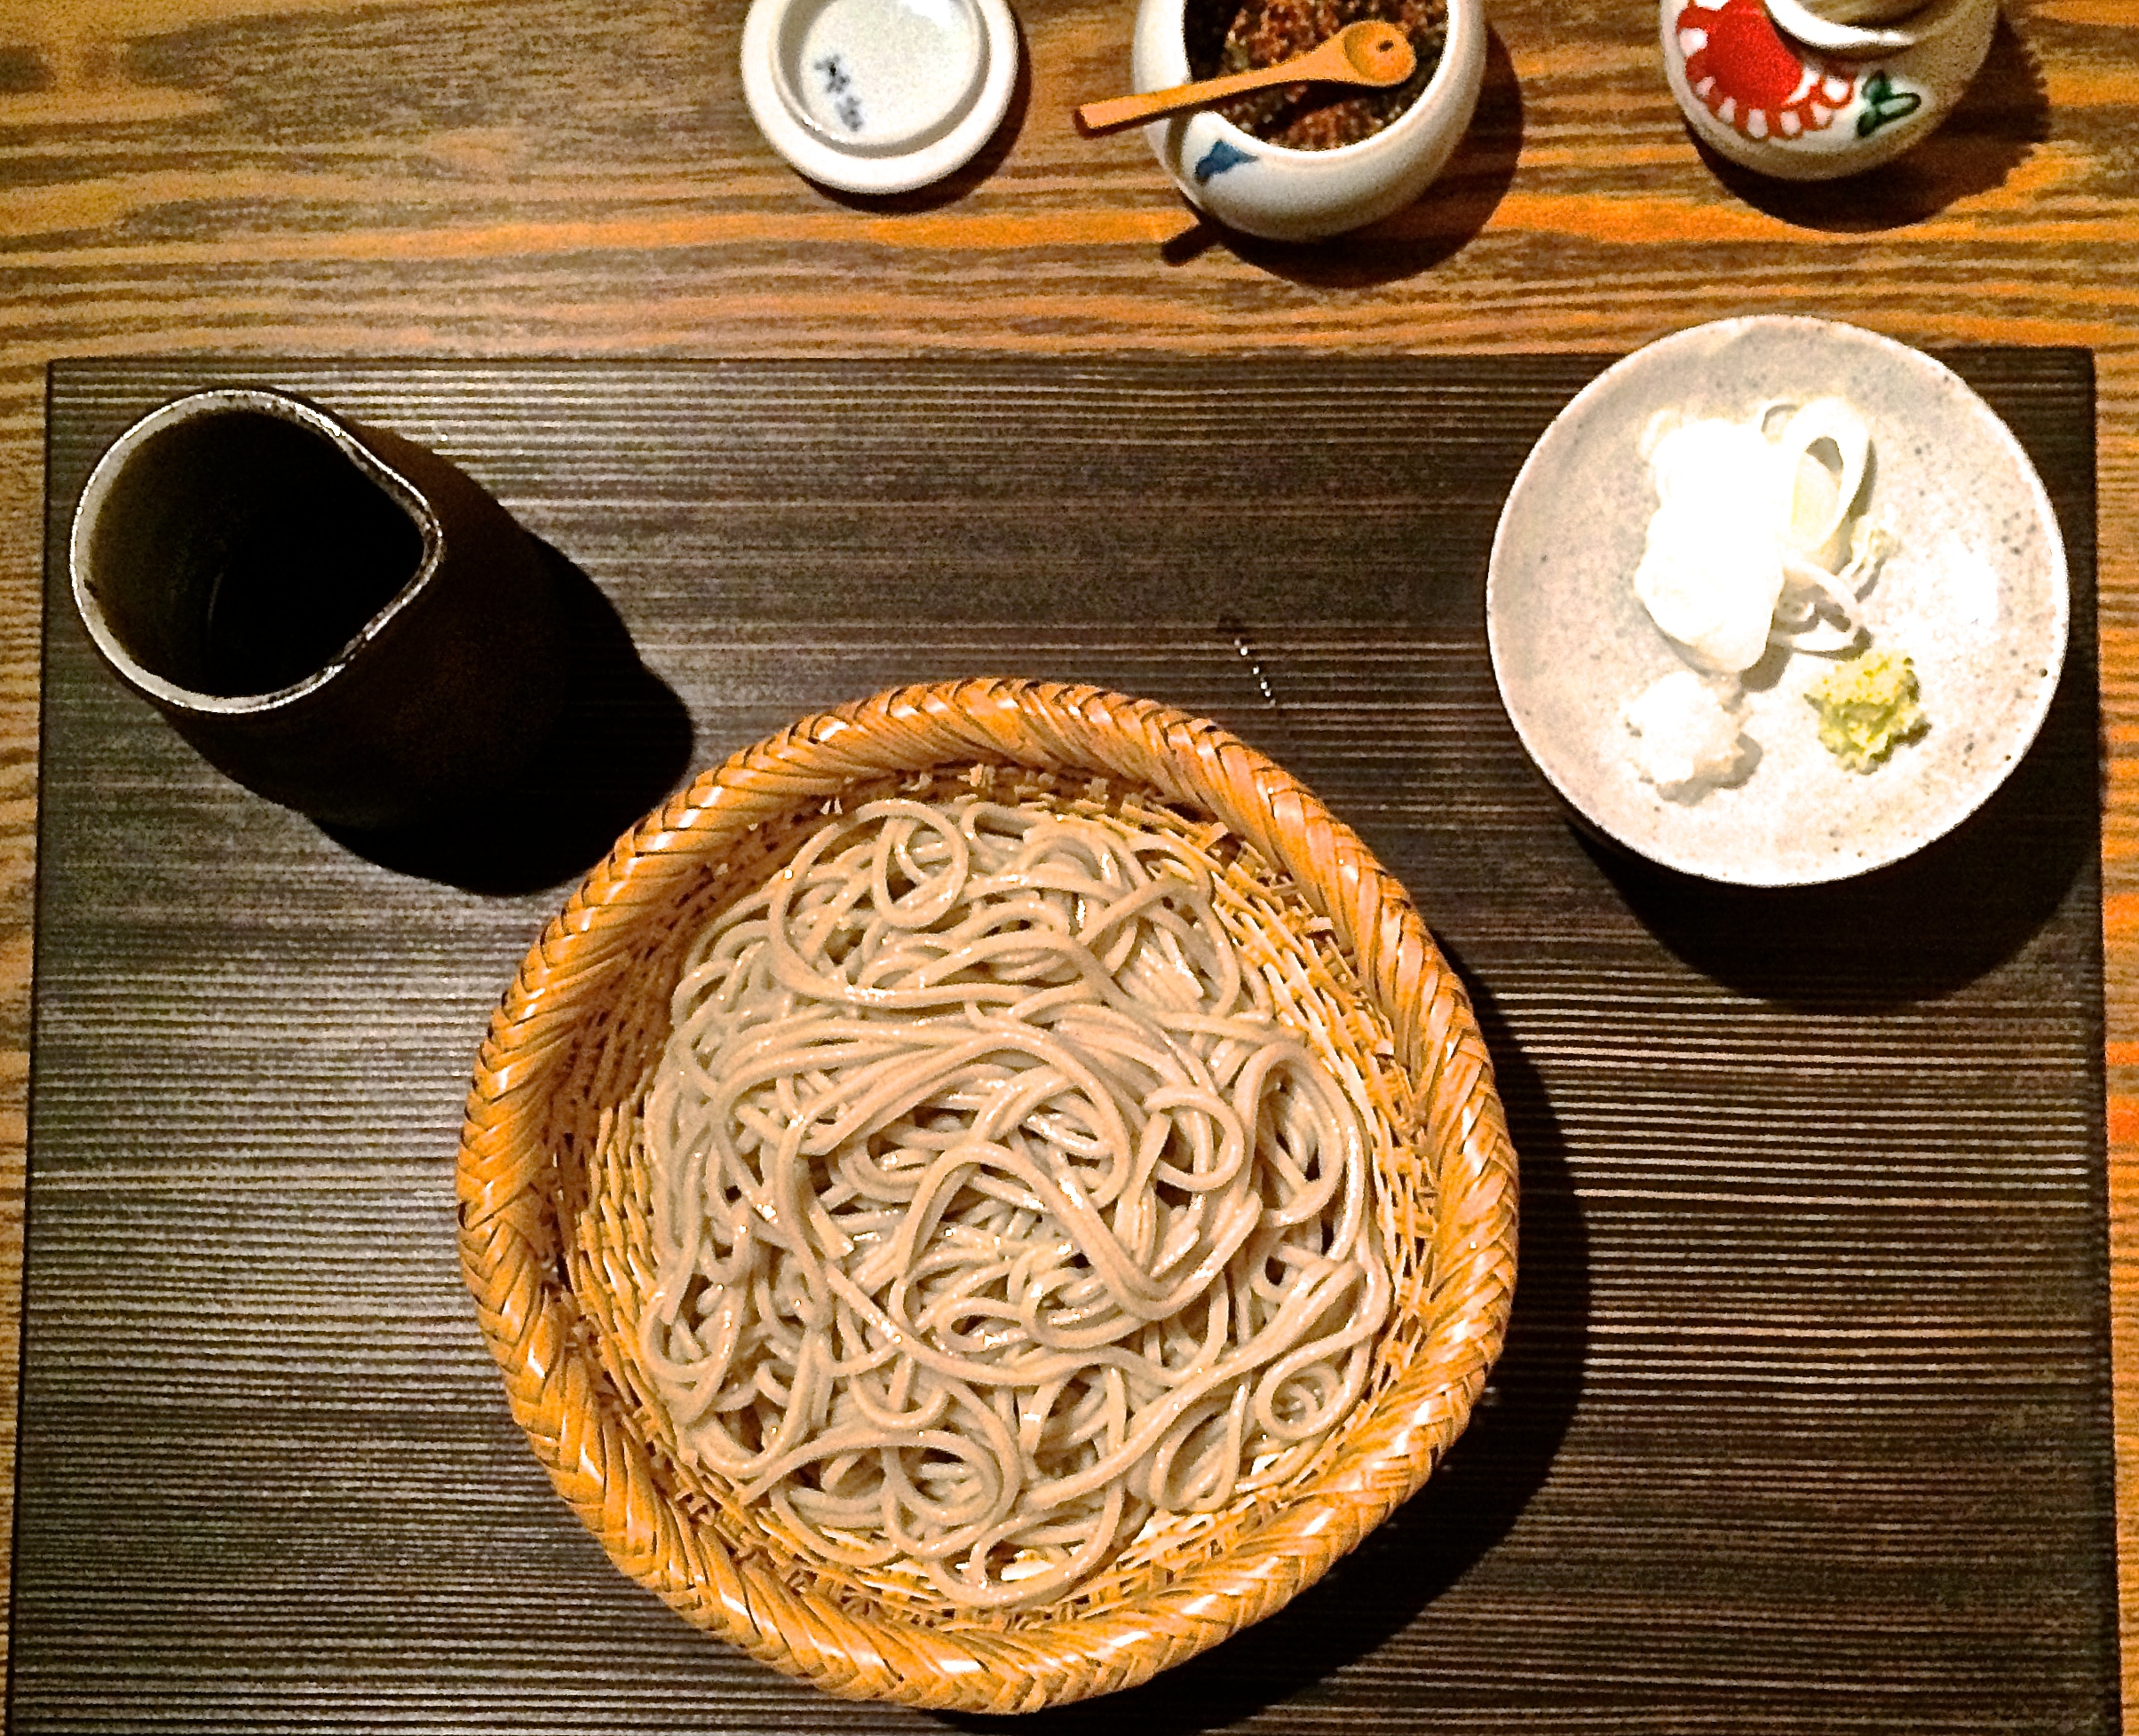 One of a kind: Muto's handmade soba noodles  | ROBBIE SWINNERTON